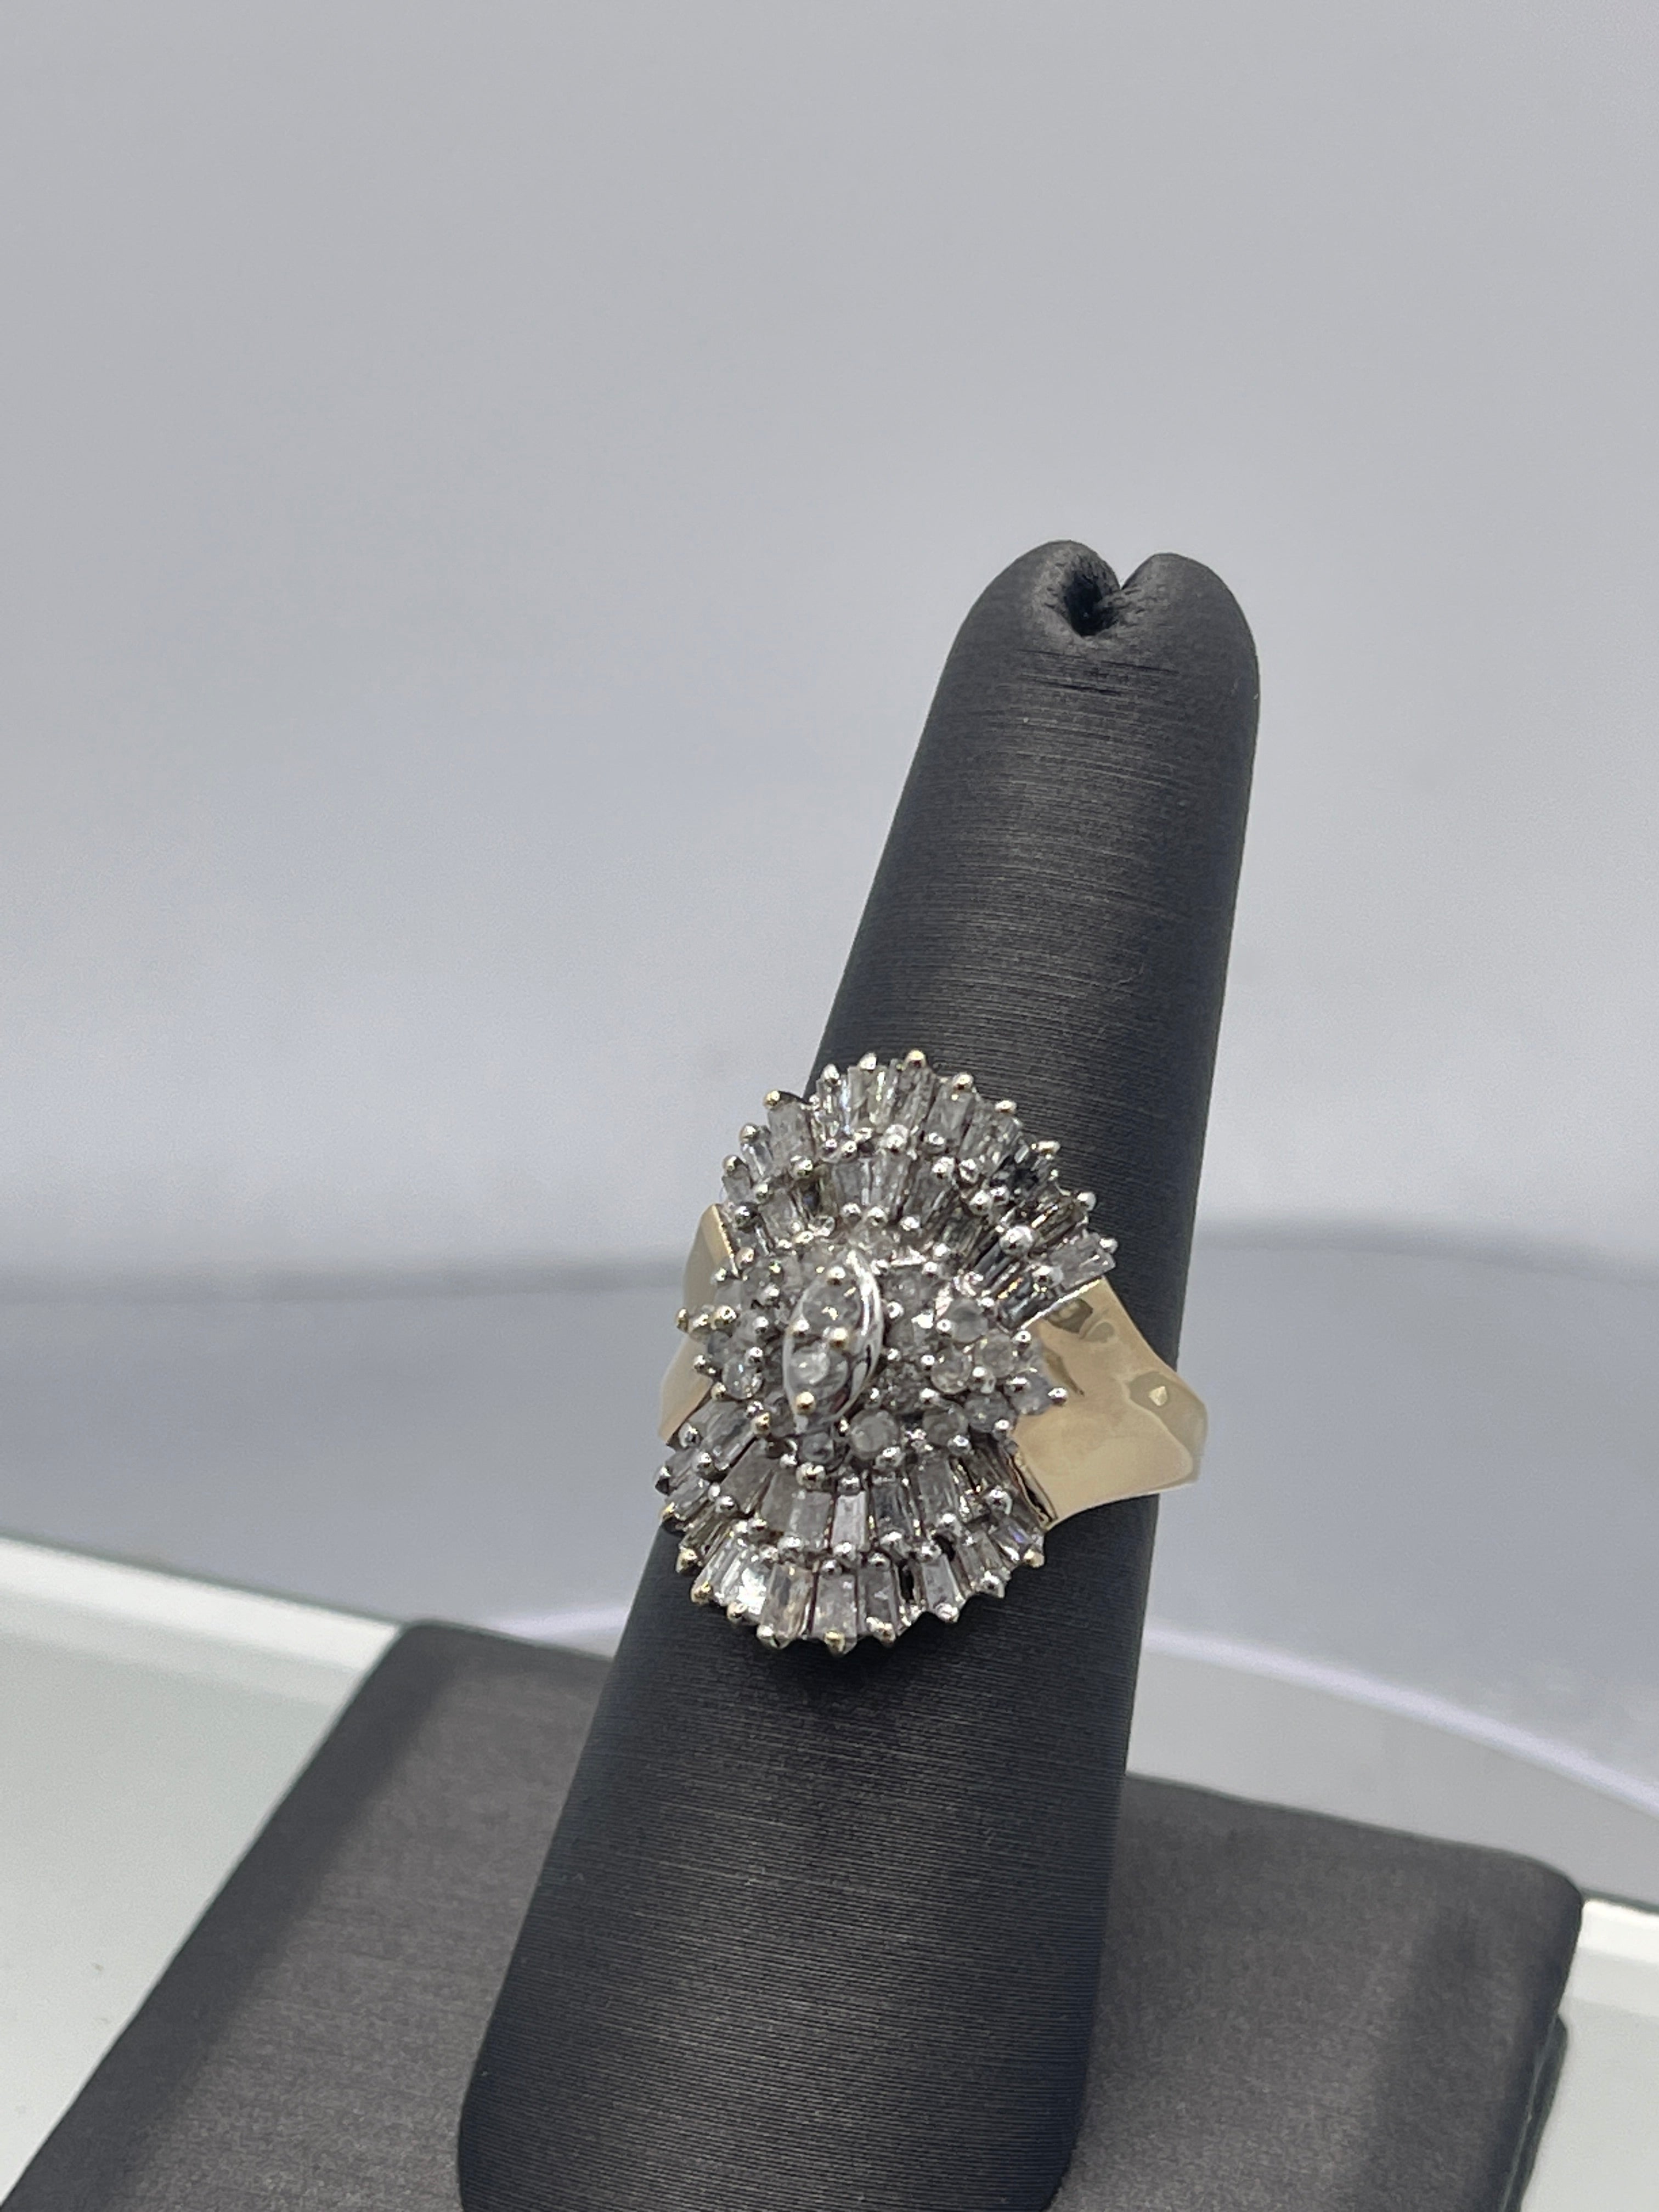 YUPHUNY 1 Carat gold Round Cubic Zirconia Silver Classic Engagement Ring  Ladies Proposal Wedding Ring (1CT Gold, 8) | Amazon.com